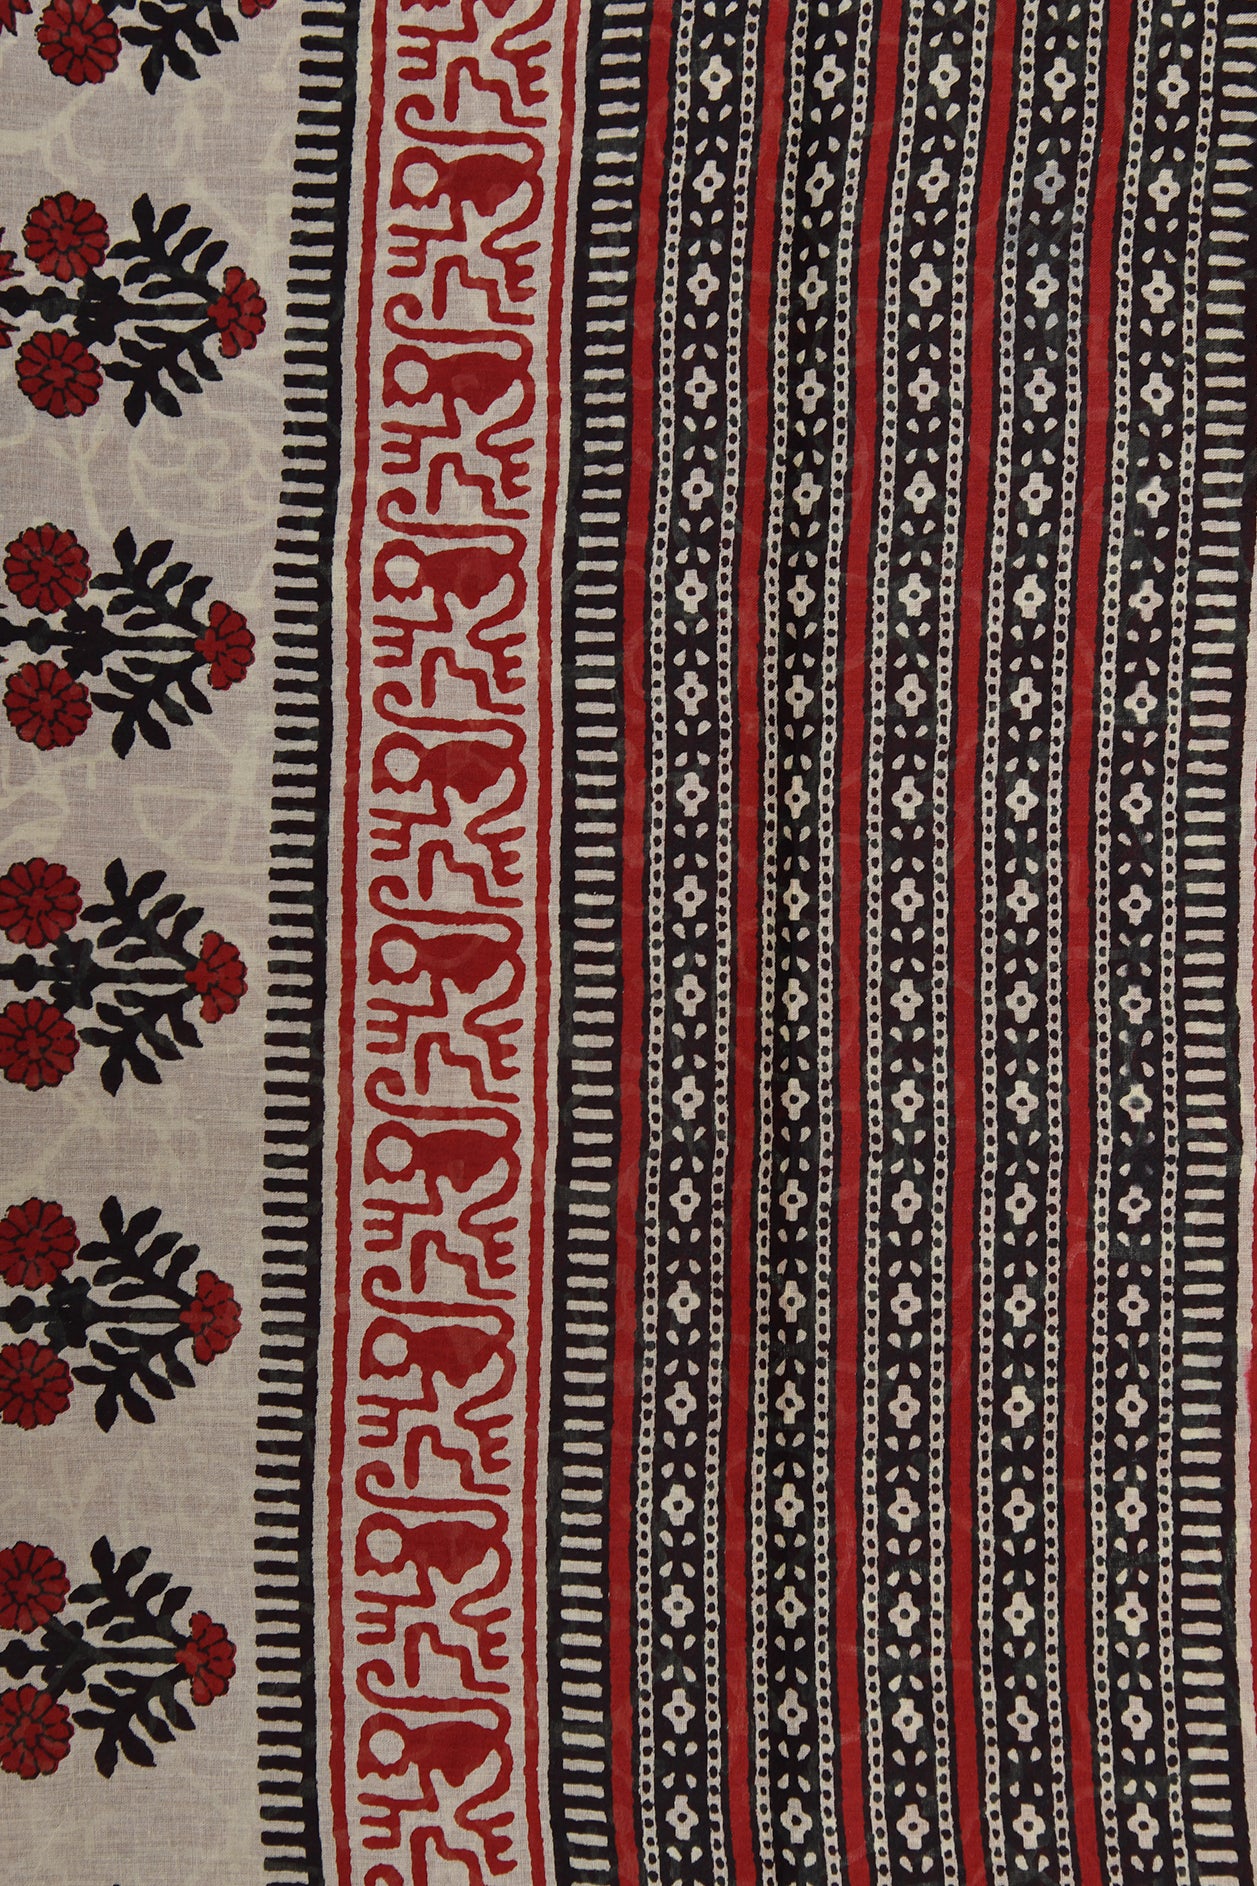 Warli Art Printed Maroon Ahmedabad Cotton Saree